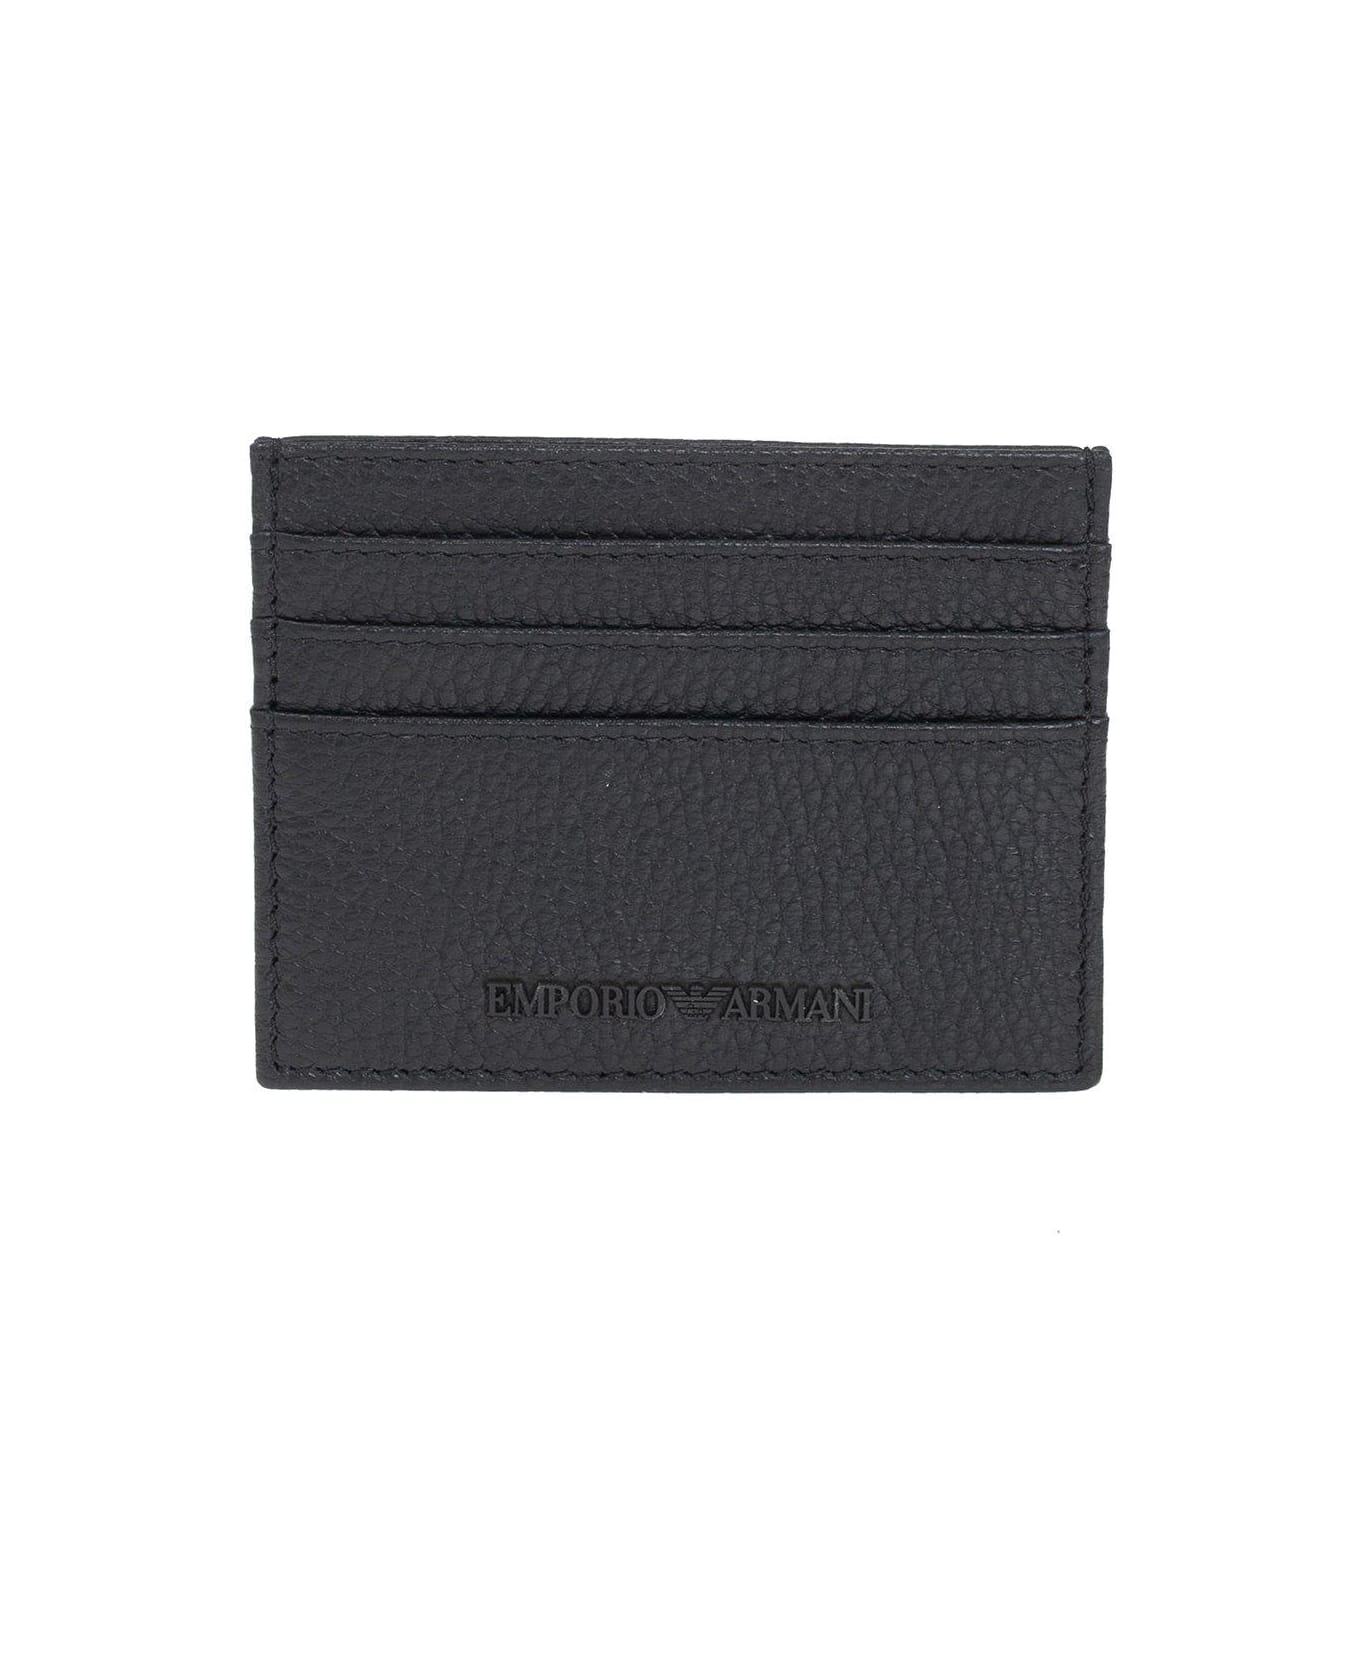 Emporio Armani Logo Embossed Cardholder And Keyring - Black キーリング